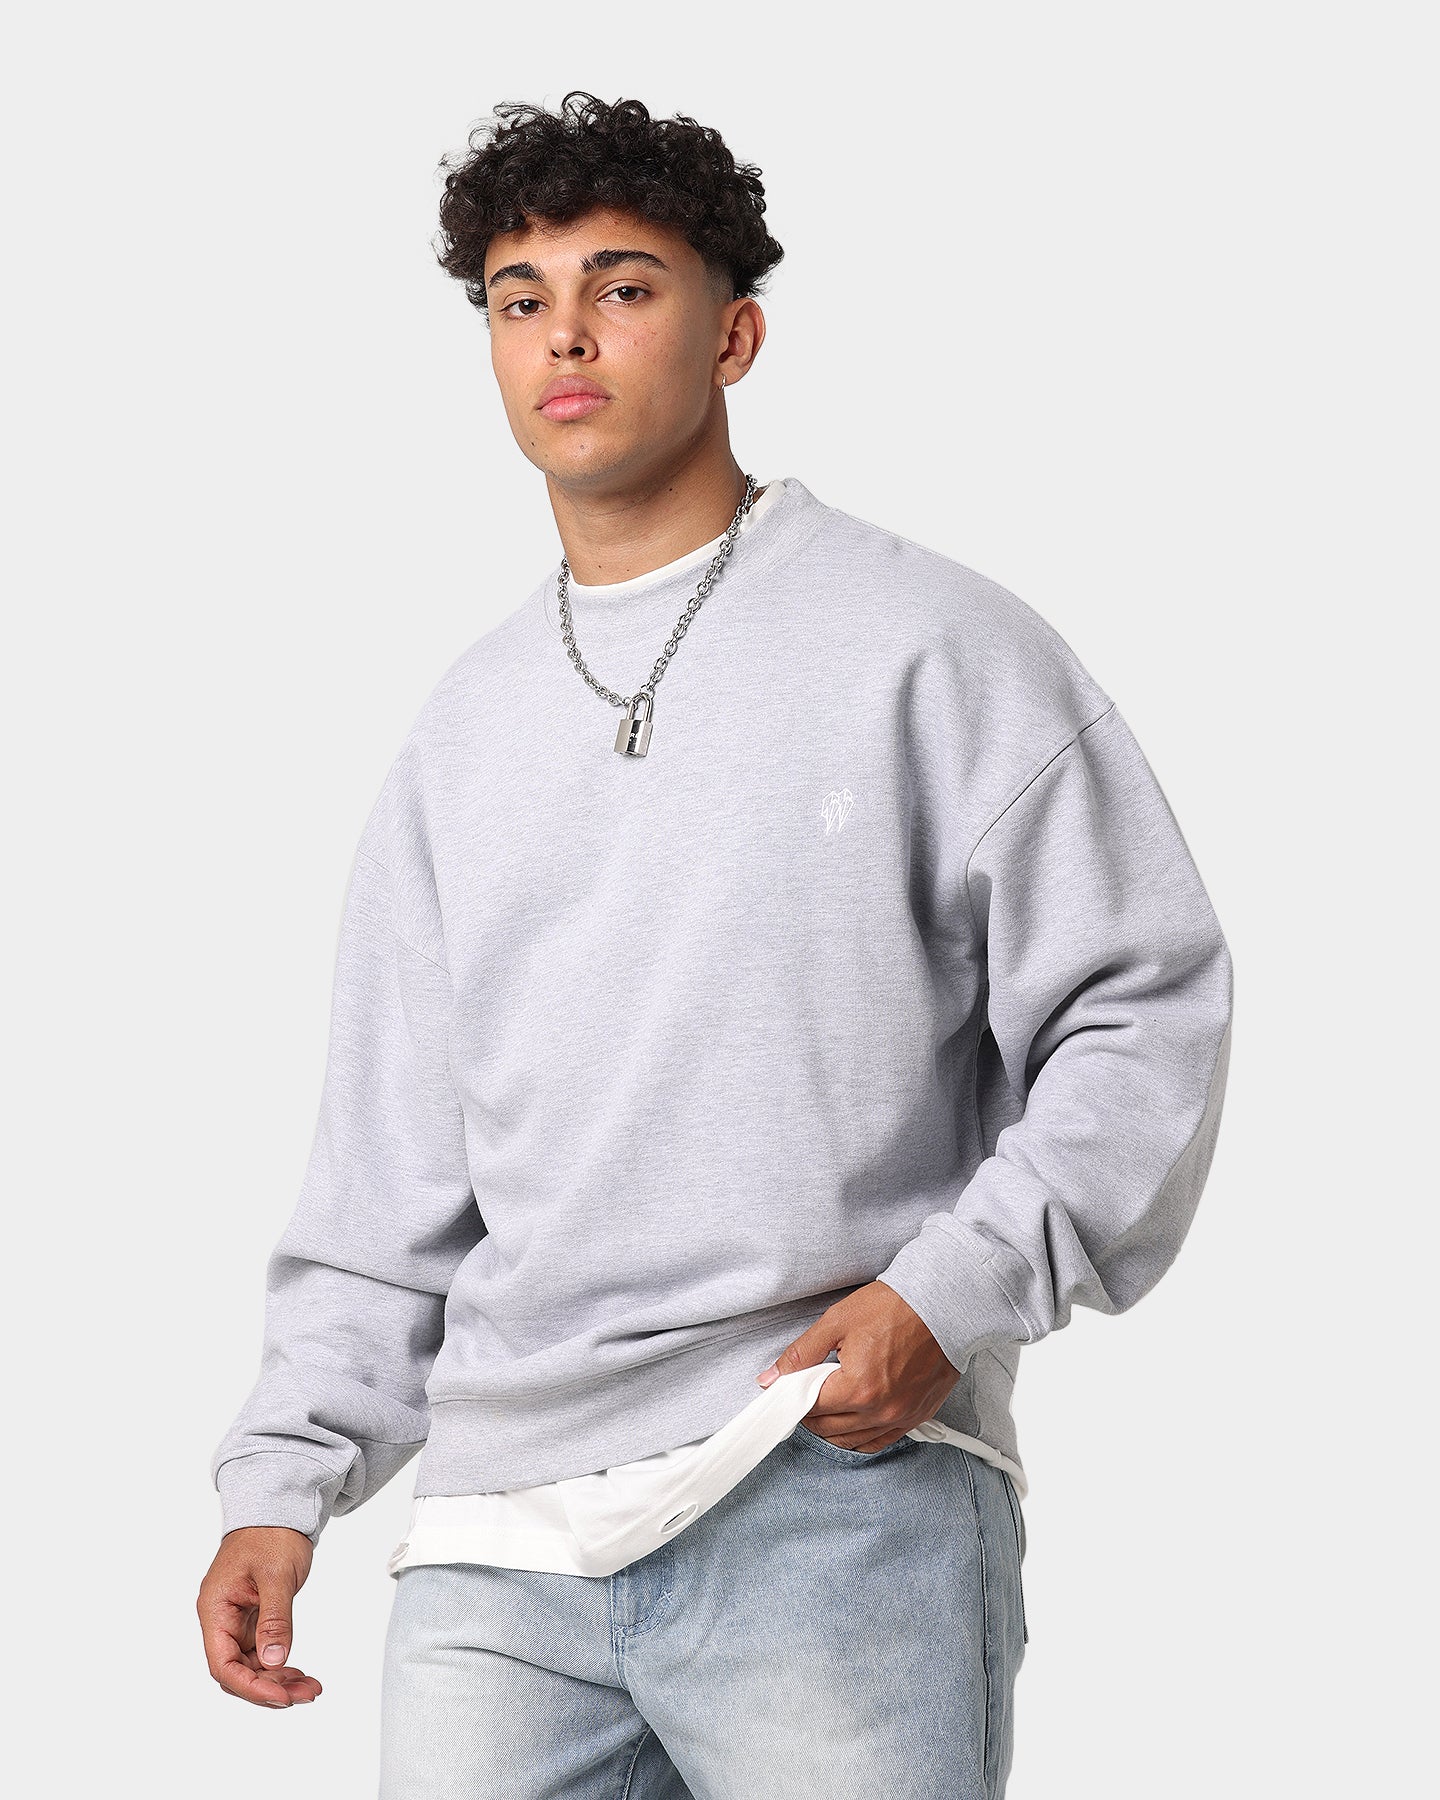 Mod Tie Dye Mookie Betts shirt, hoodie, sweater, long sleeve and tank top